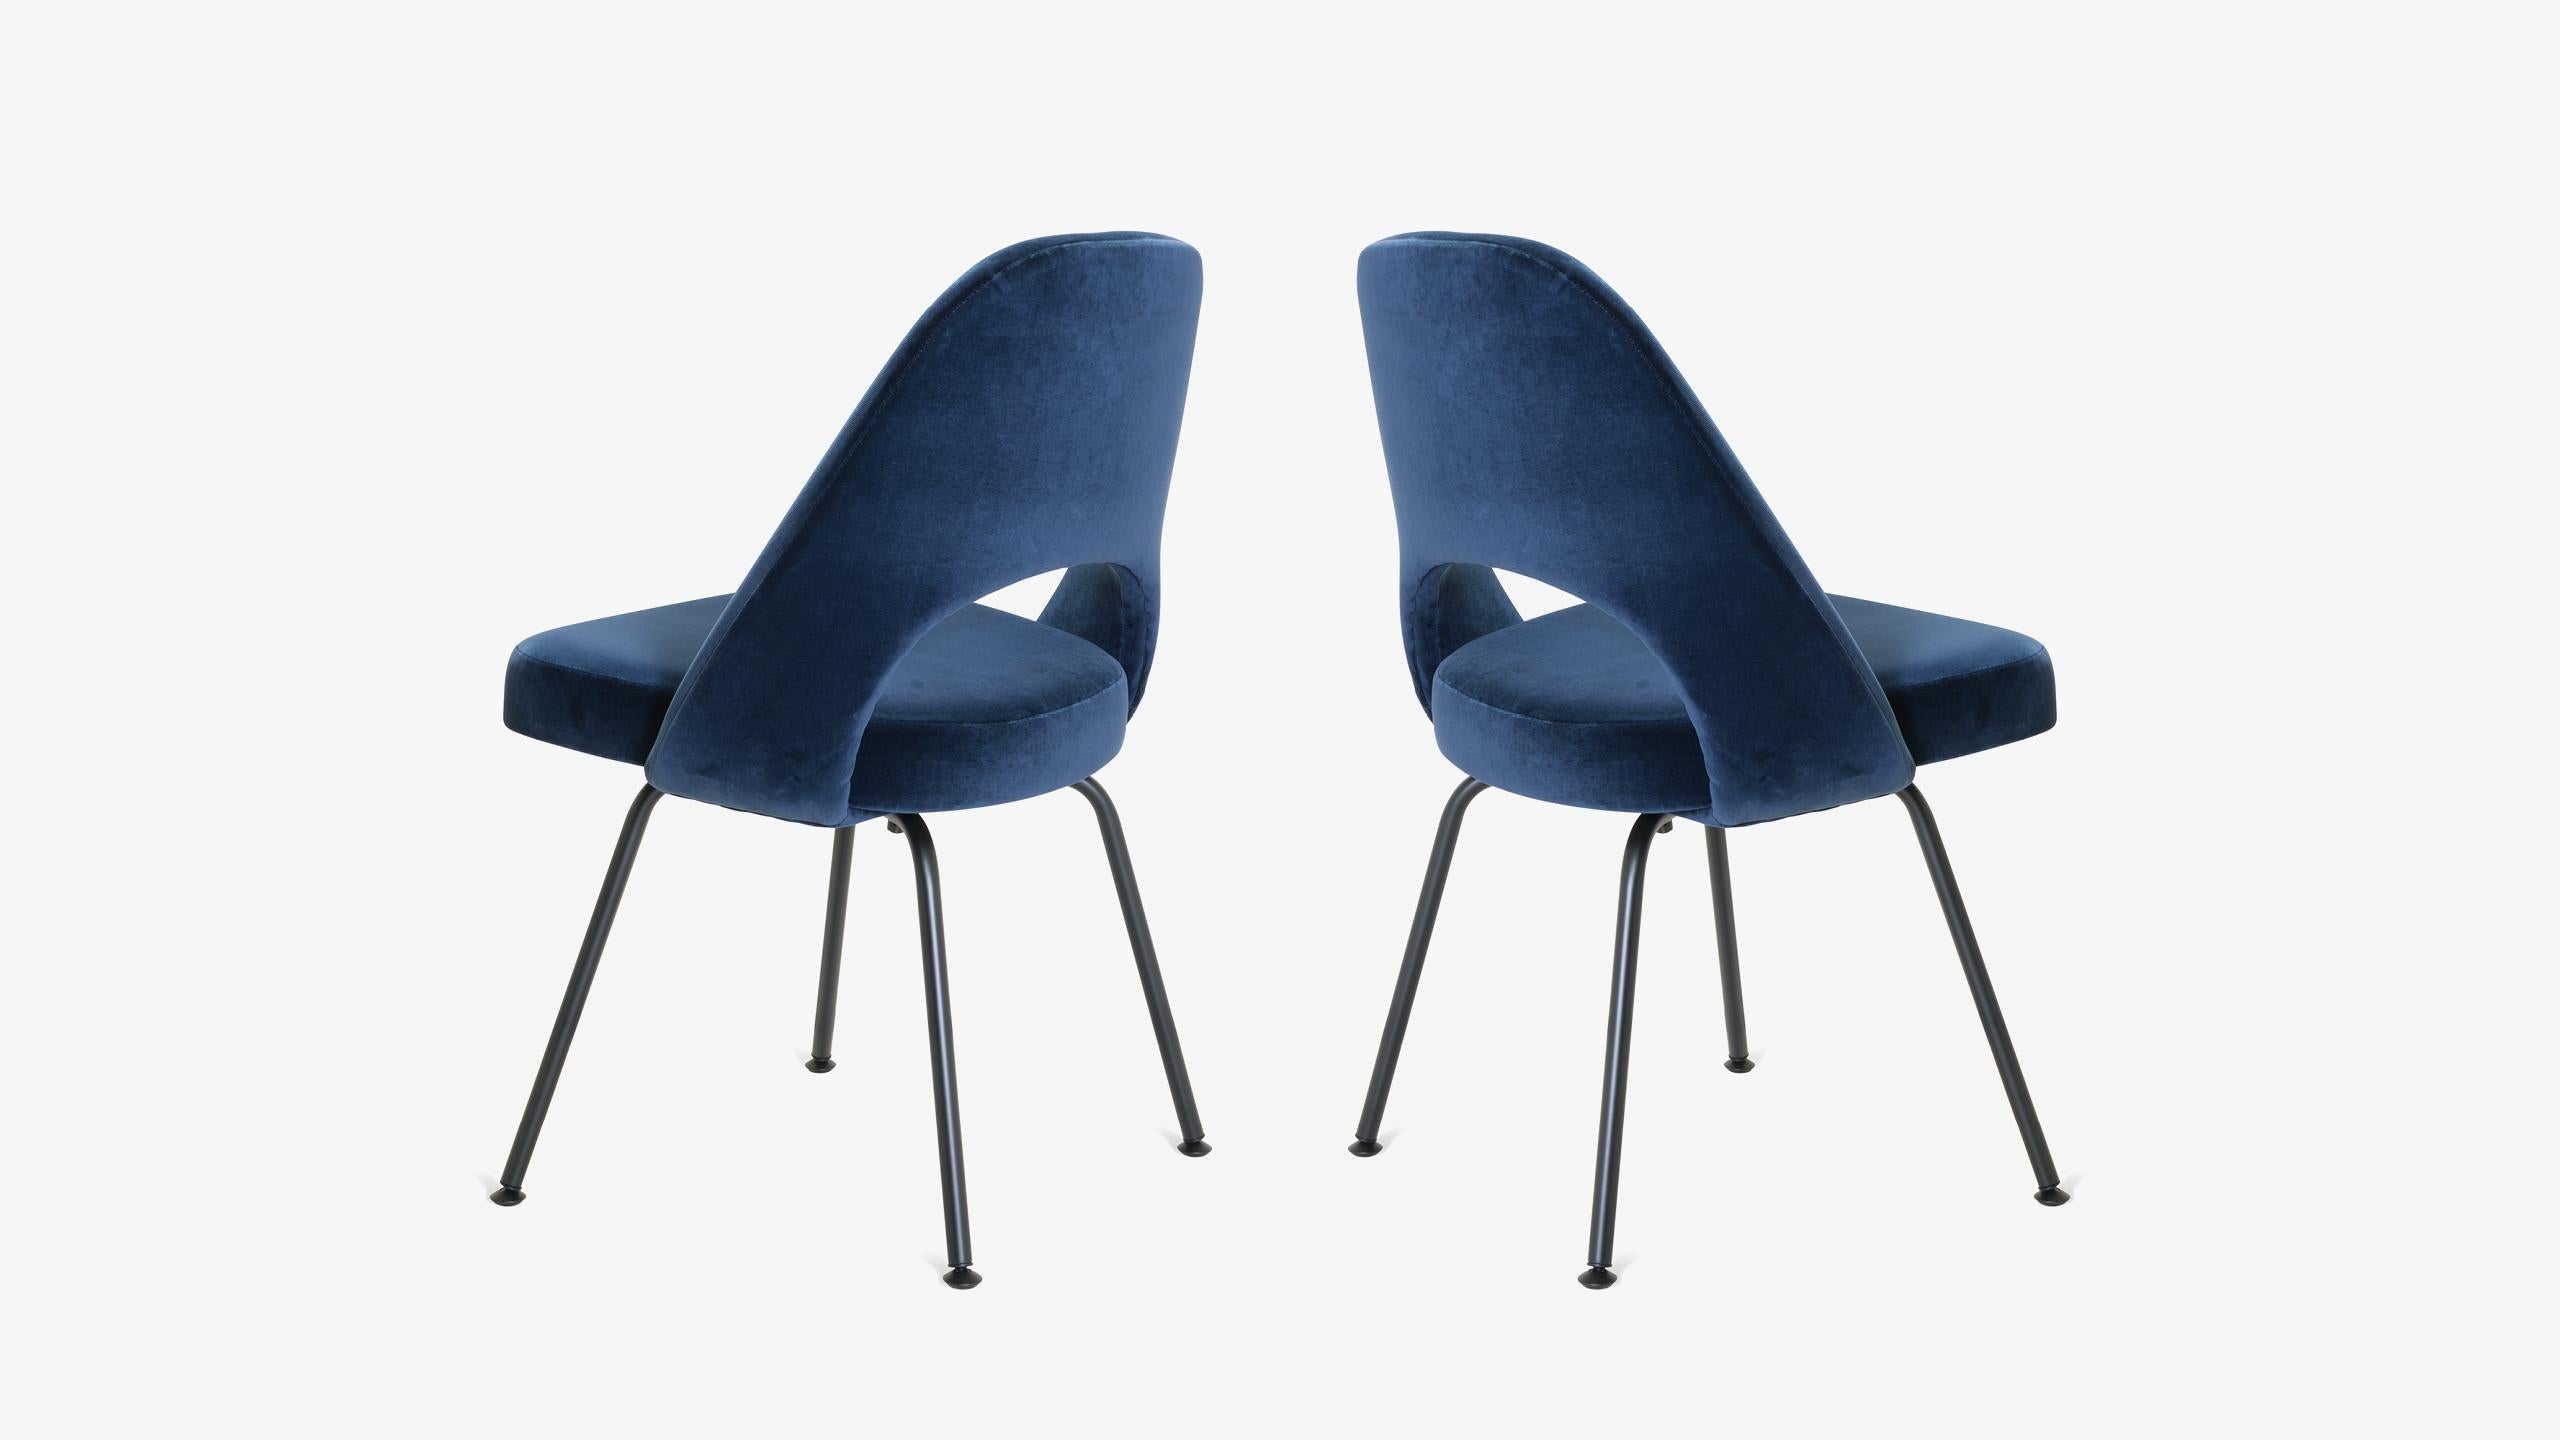 Américain Saarinen fauteuils de direction sans accoudoirs en velours bleu marine, mat obsidienne en vente